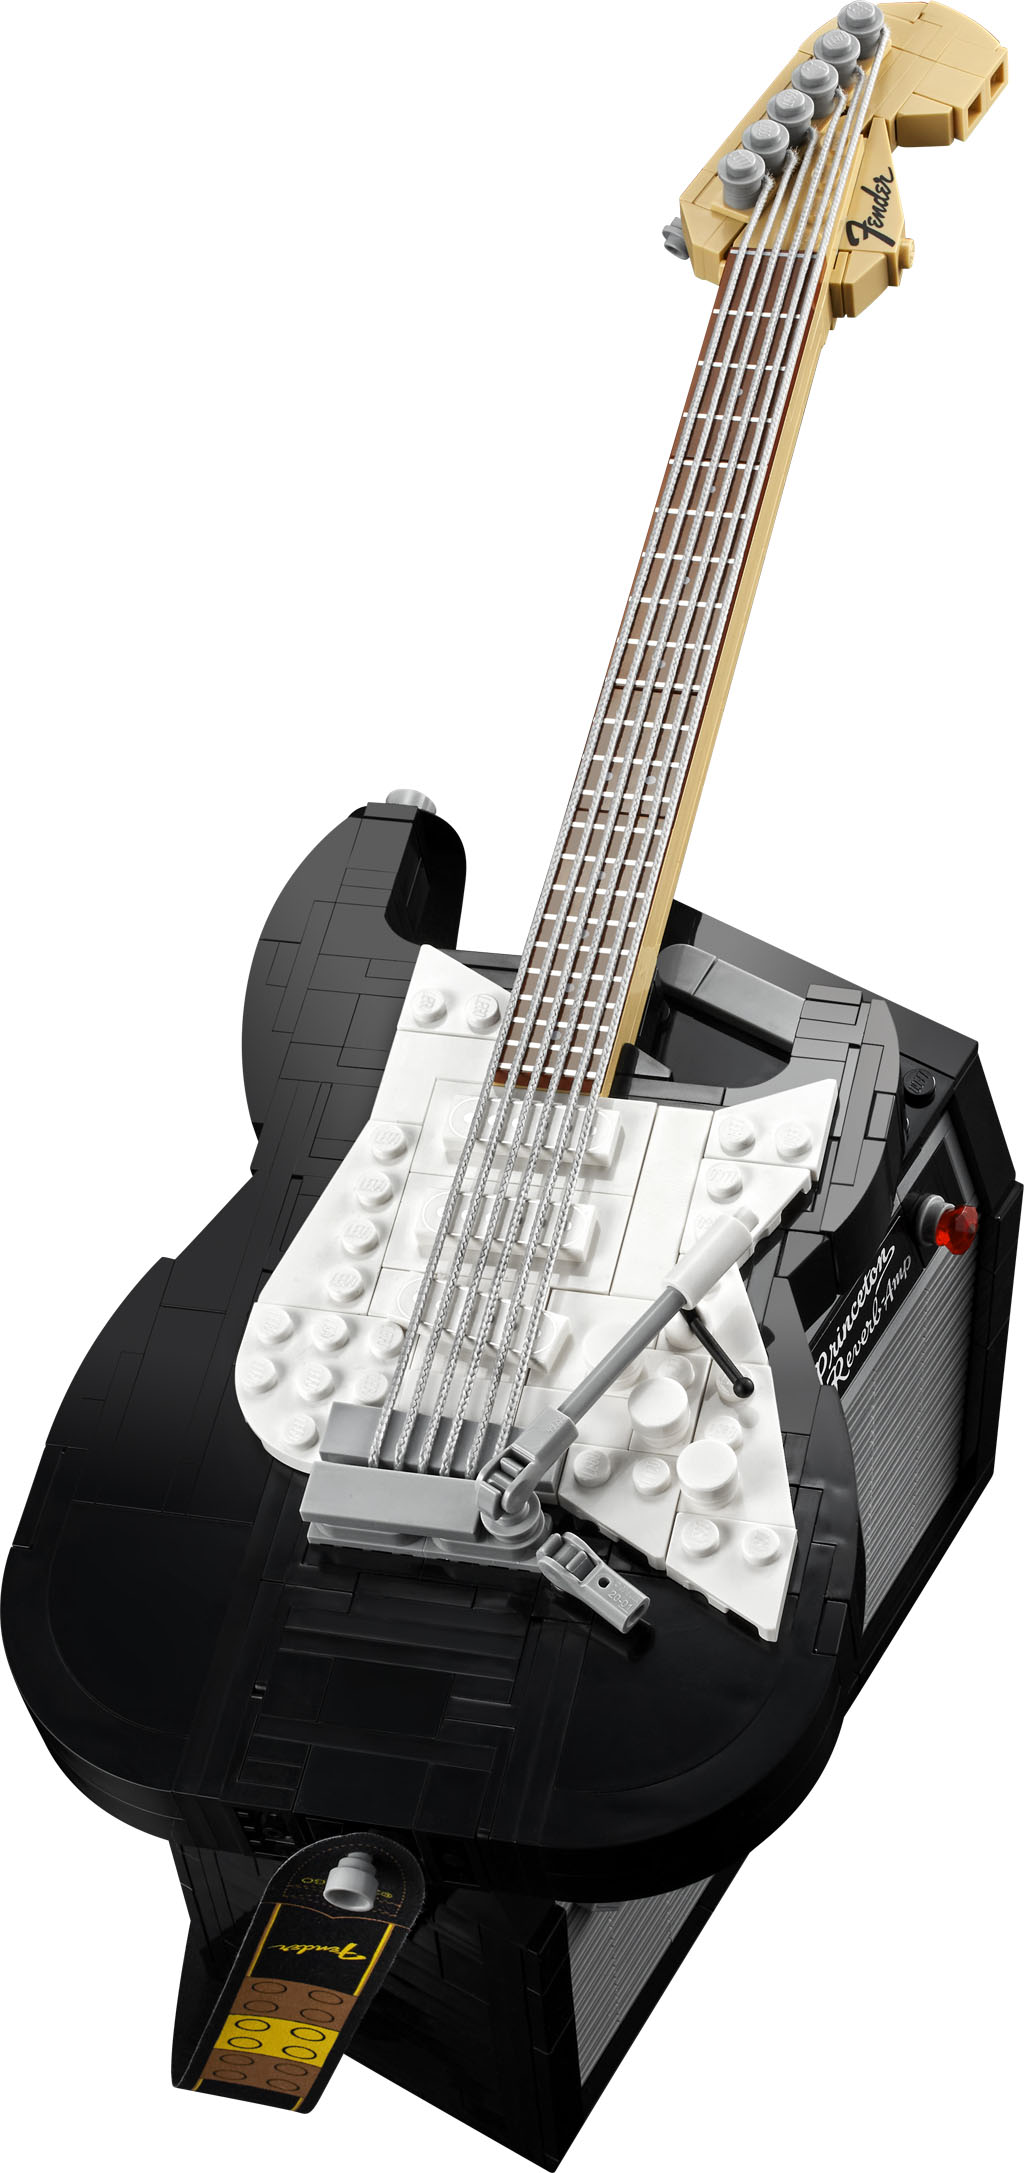 LEGO 21329 Fender Stratocaster (Гитара Фендер Стратокастер)